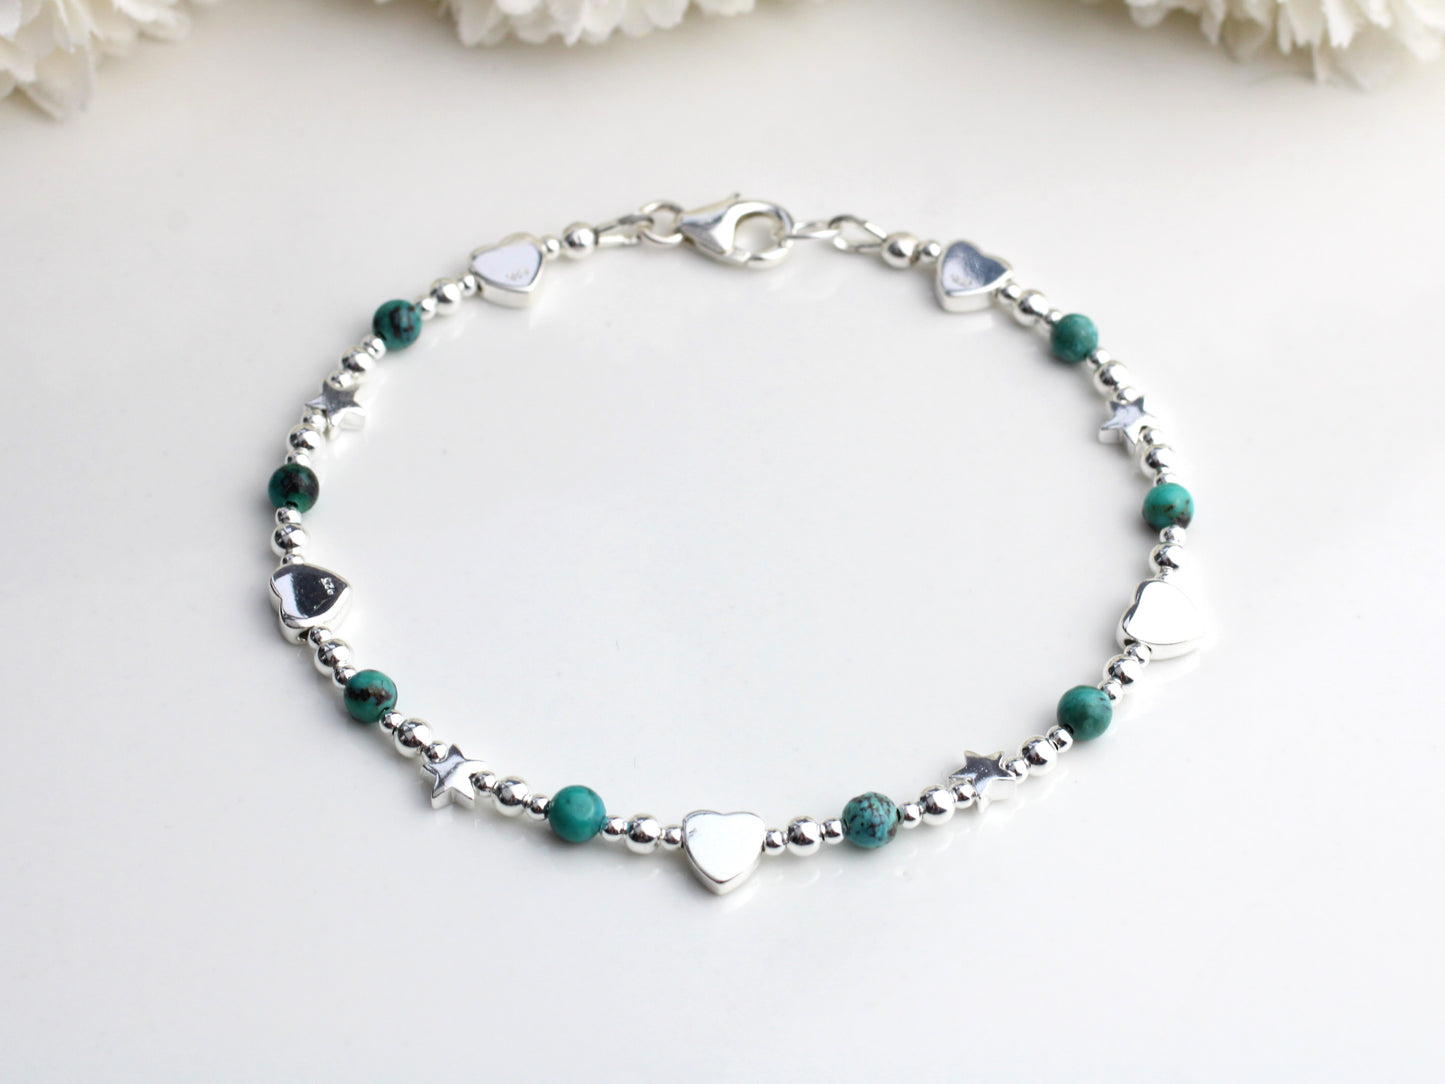 Turquoise bracelet in silver. December birthday gift.